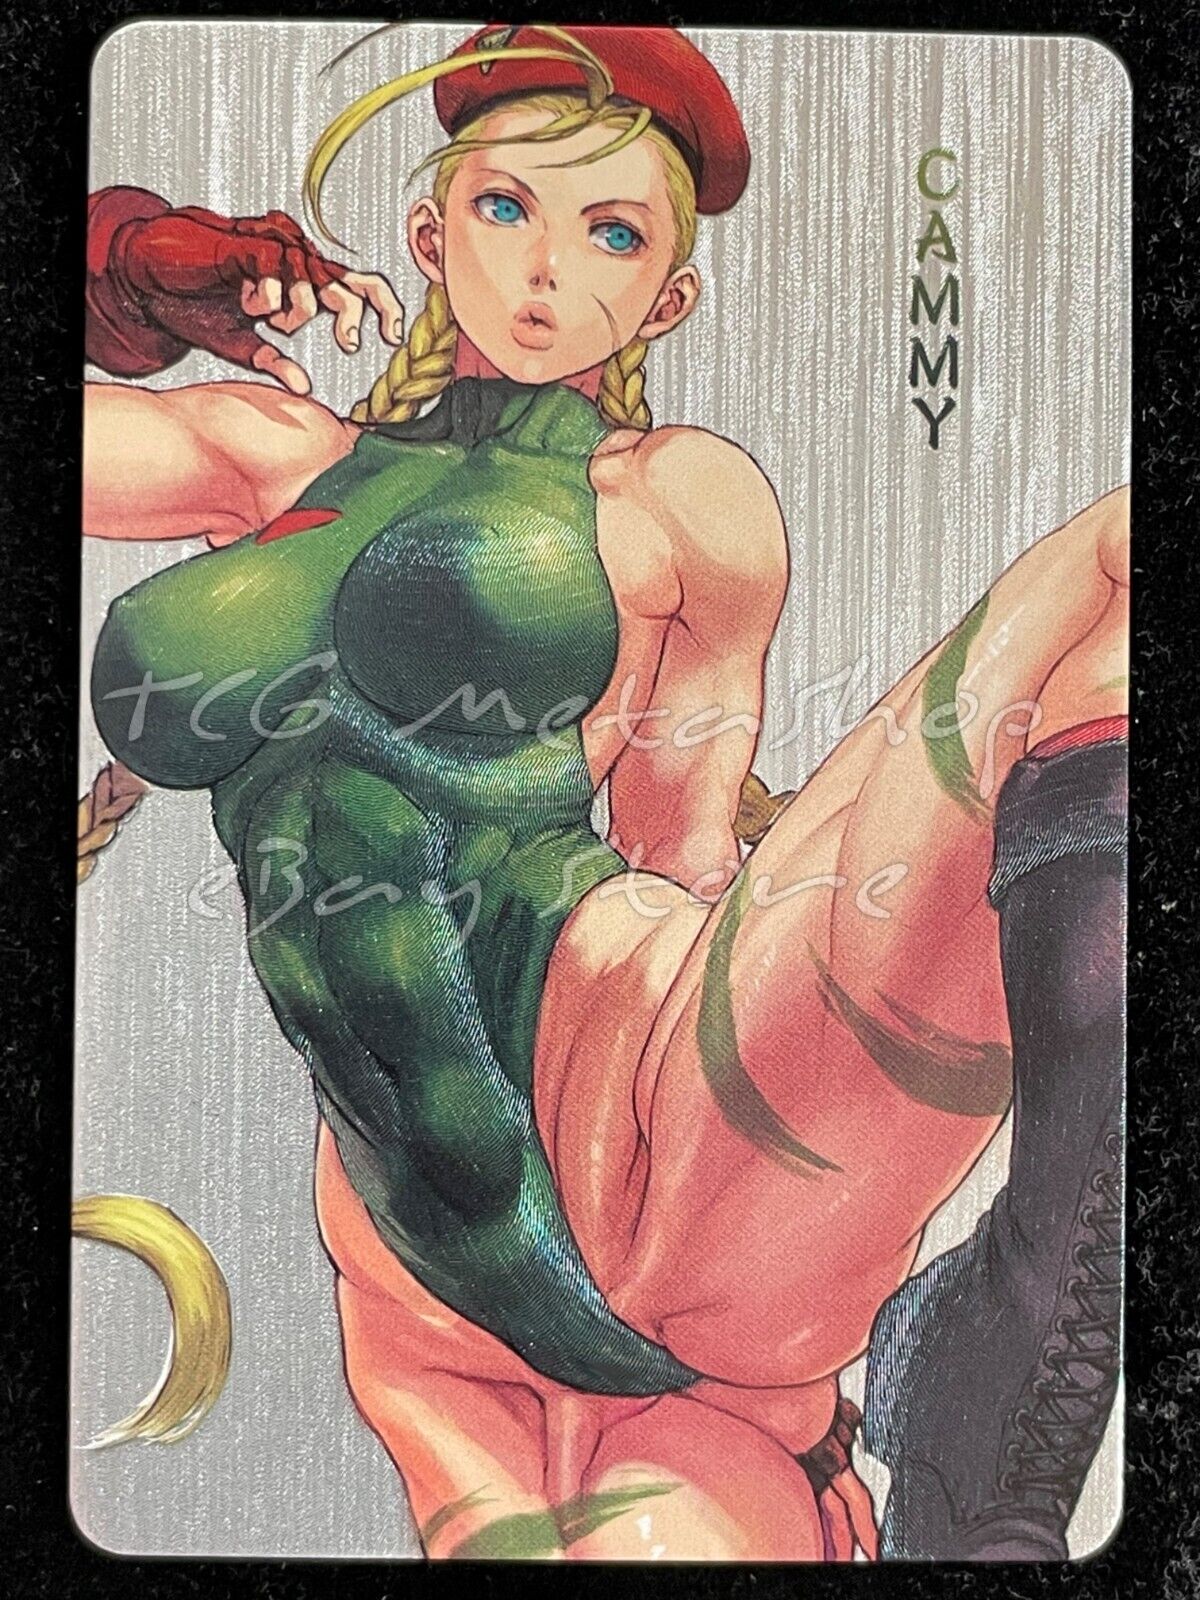 🔥 Cammy Street Fighter Goddess Story Anime Card ACG # 2331 🔥